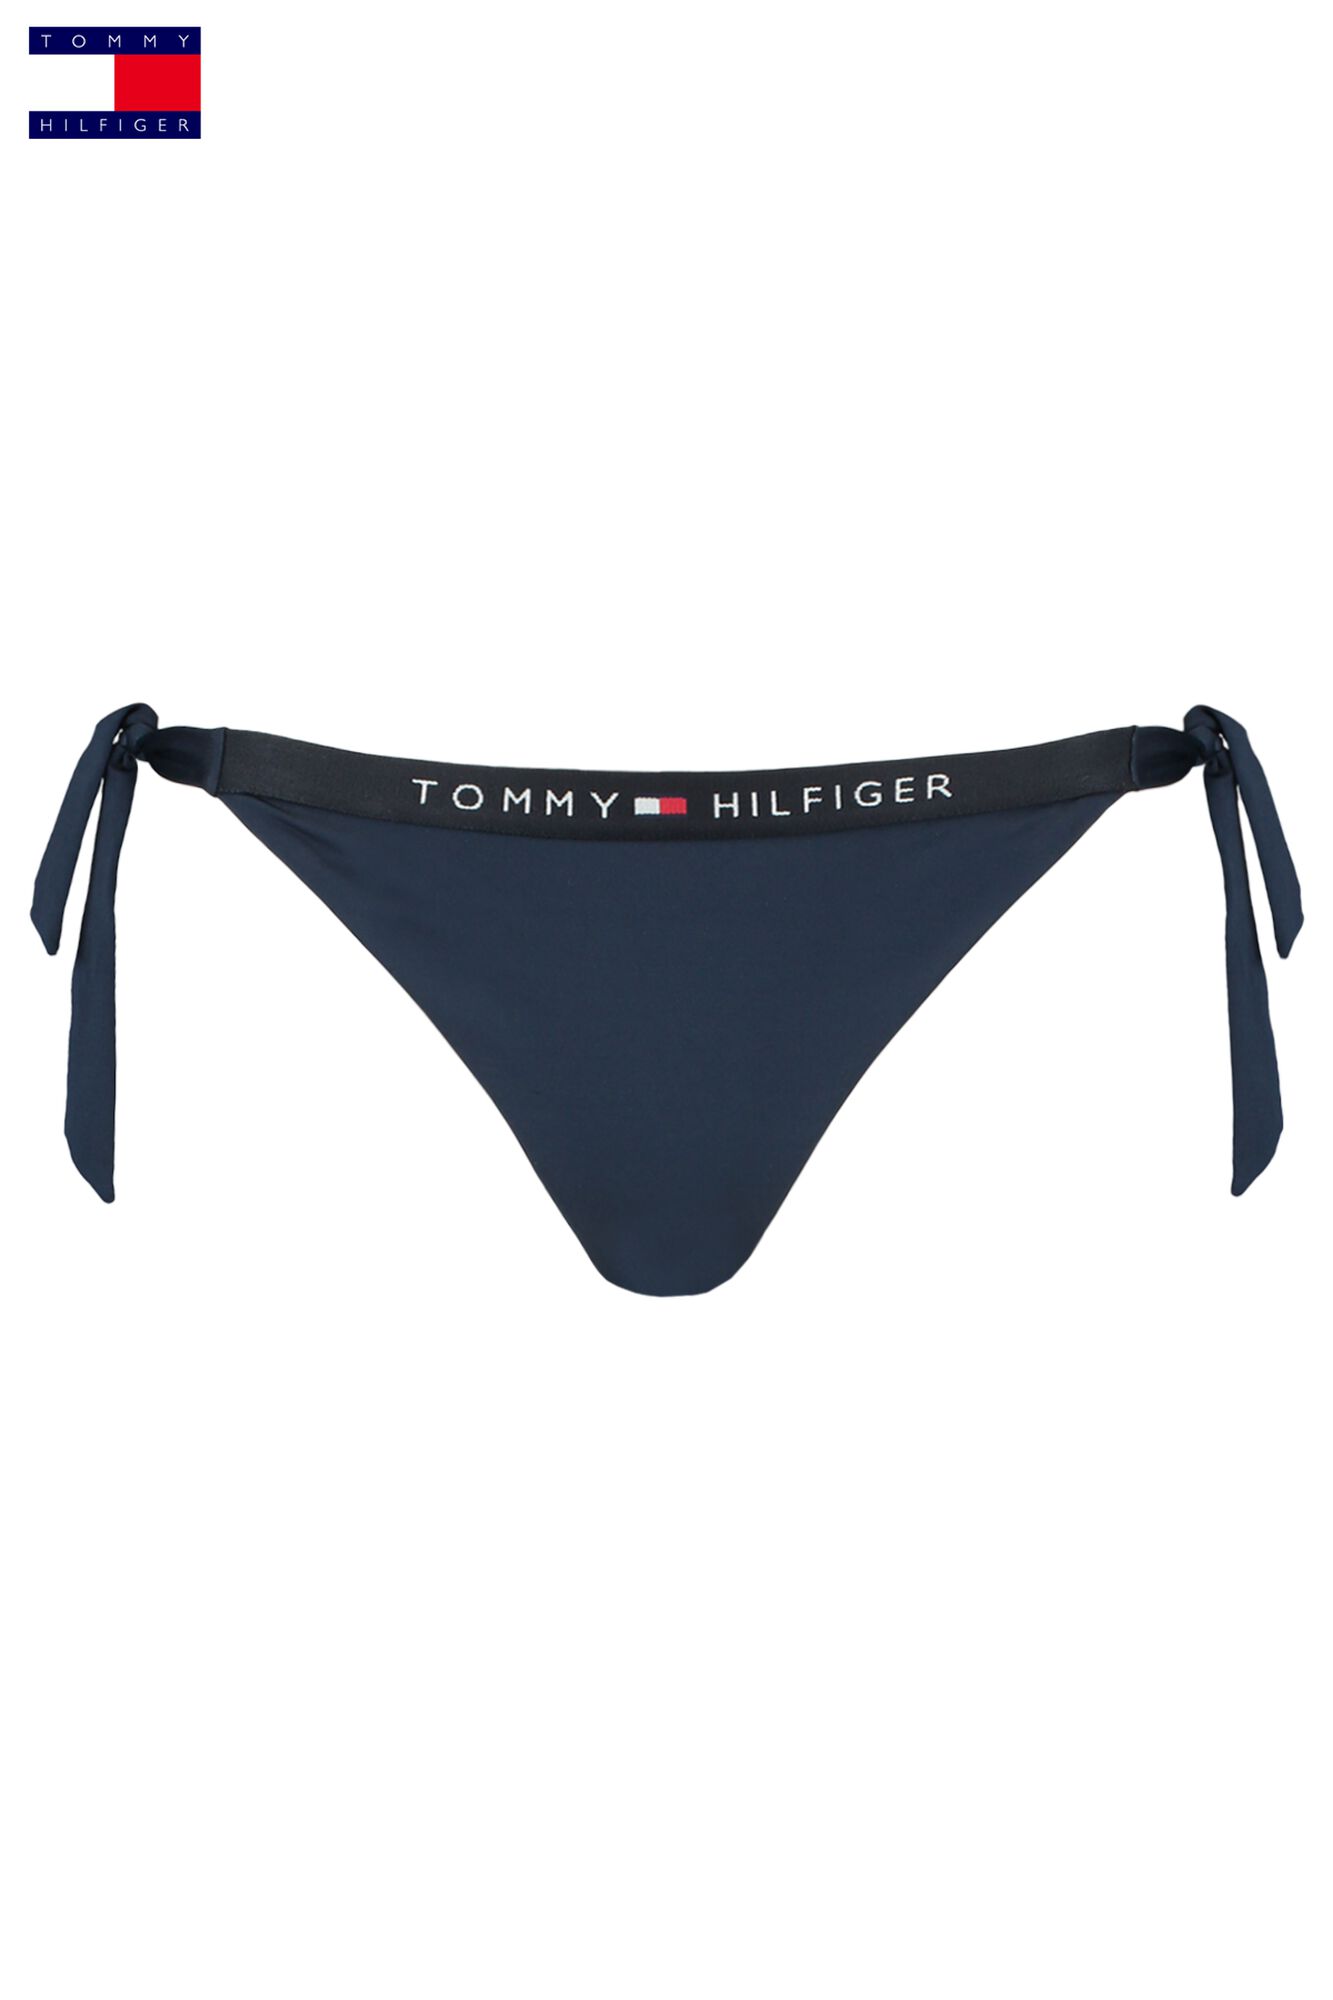 Women Cheeky Tommy Hilfiger Blue Buy Online